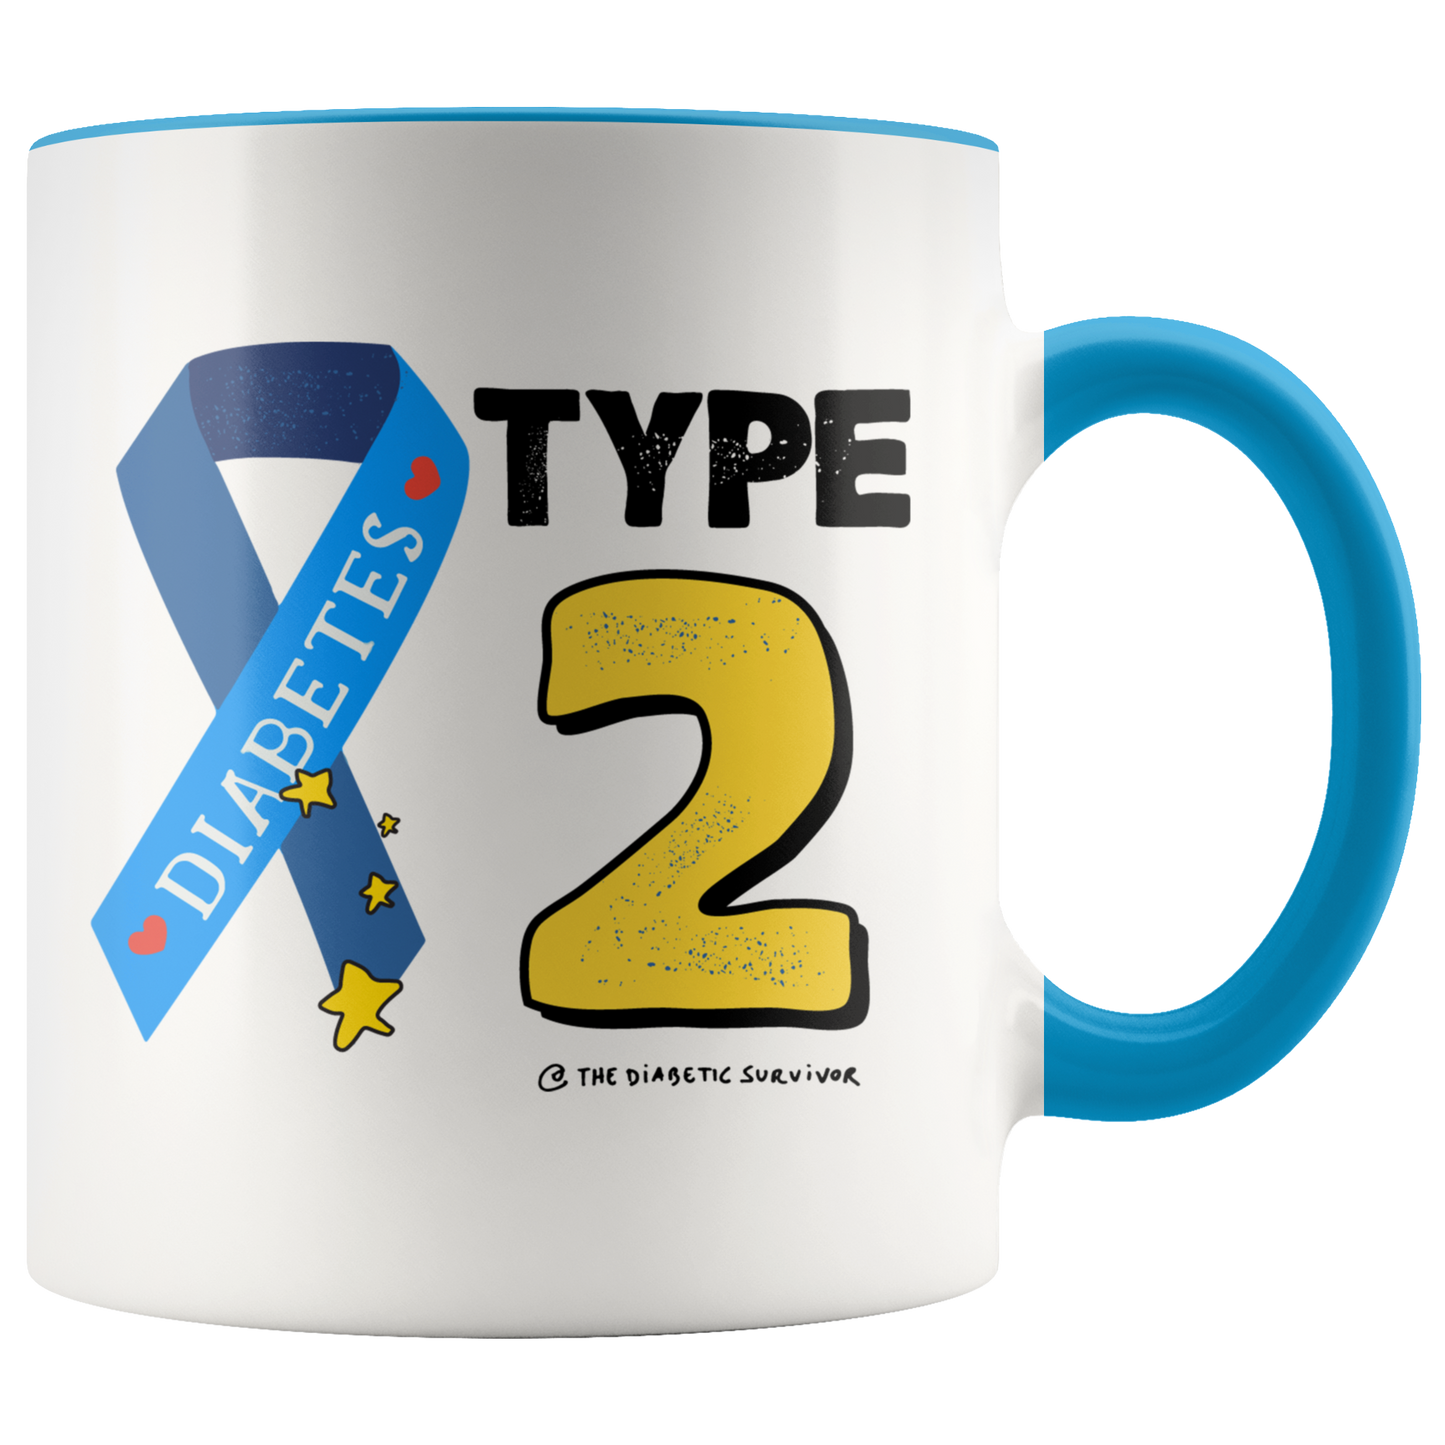 Diabetes Type 2 ceramic mug